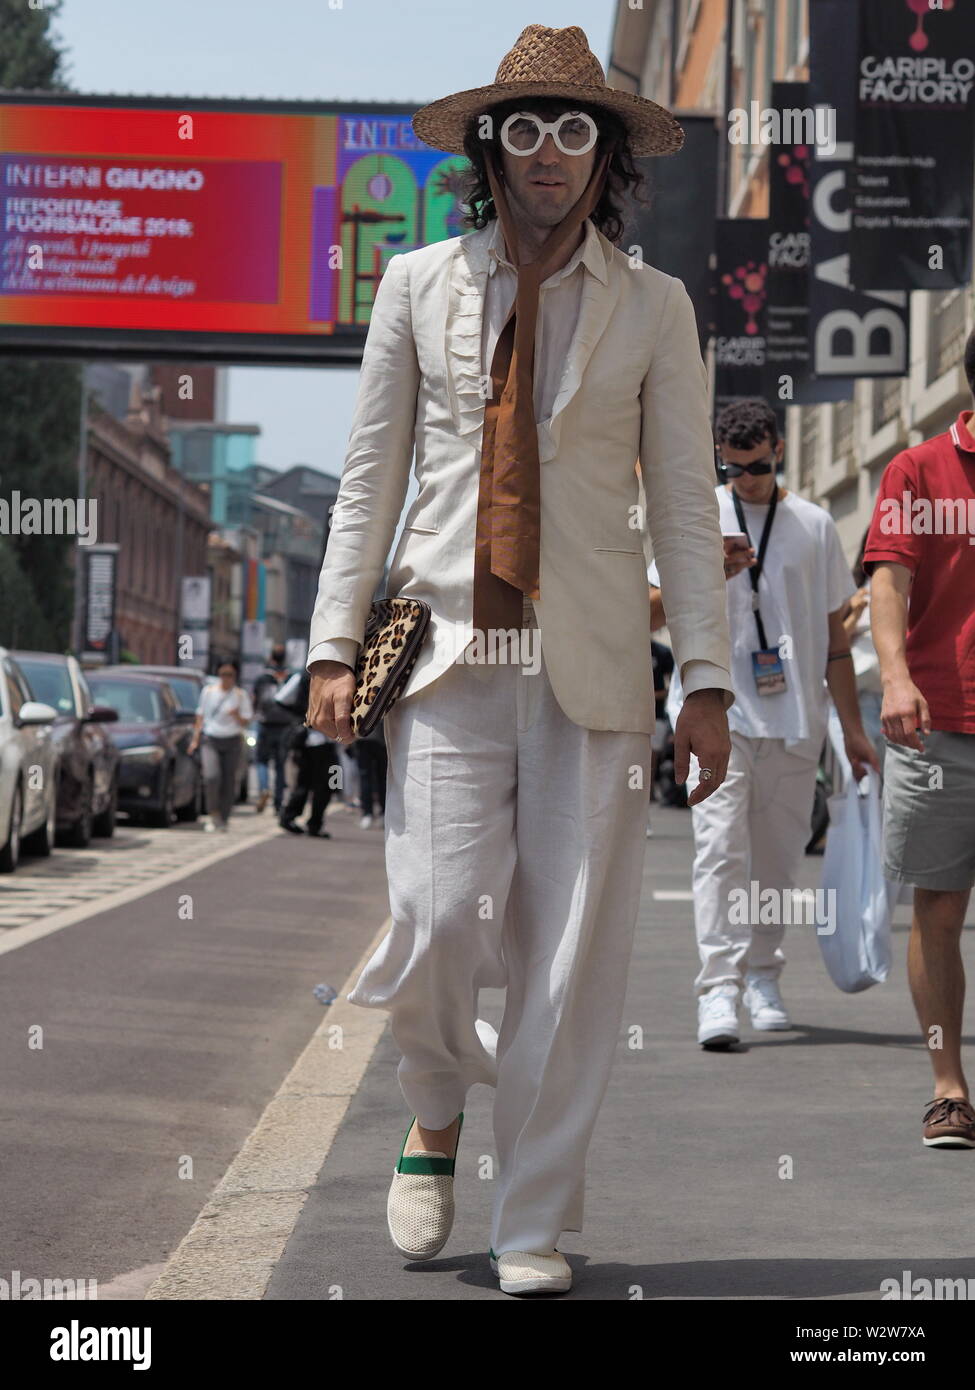 MILANO, Italien: 15. Juni 2019: Fashion Blogger street style Outfit nach Magliano fashion show während der Mailand Fashion Week Mann 2019/2020 Stockfoto